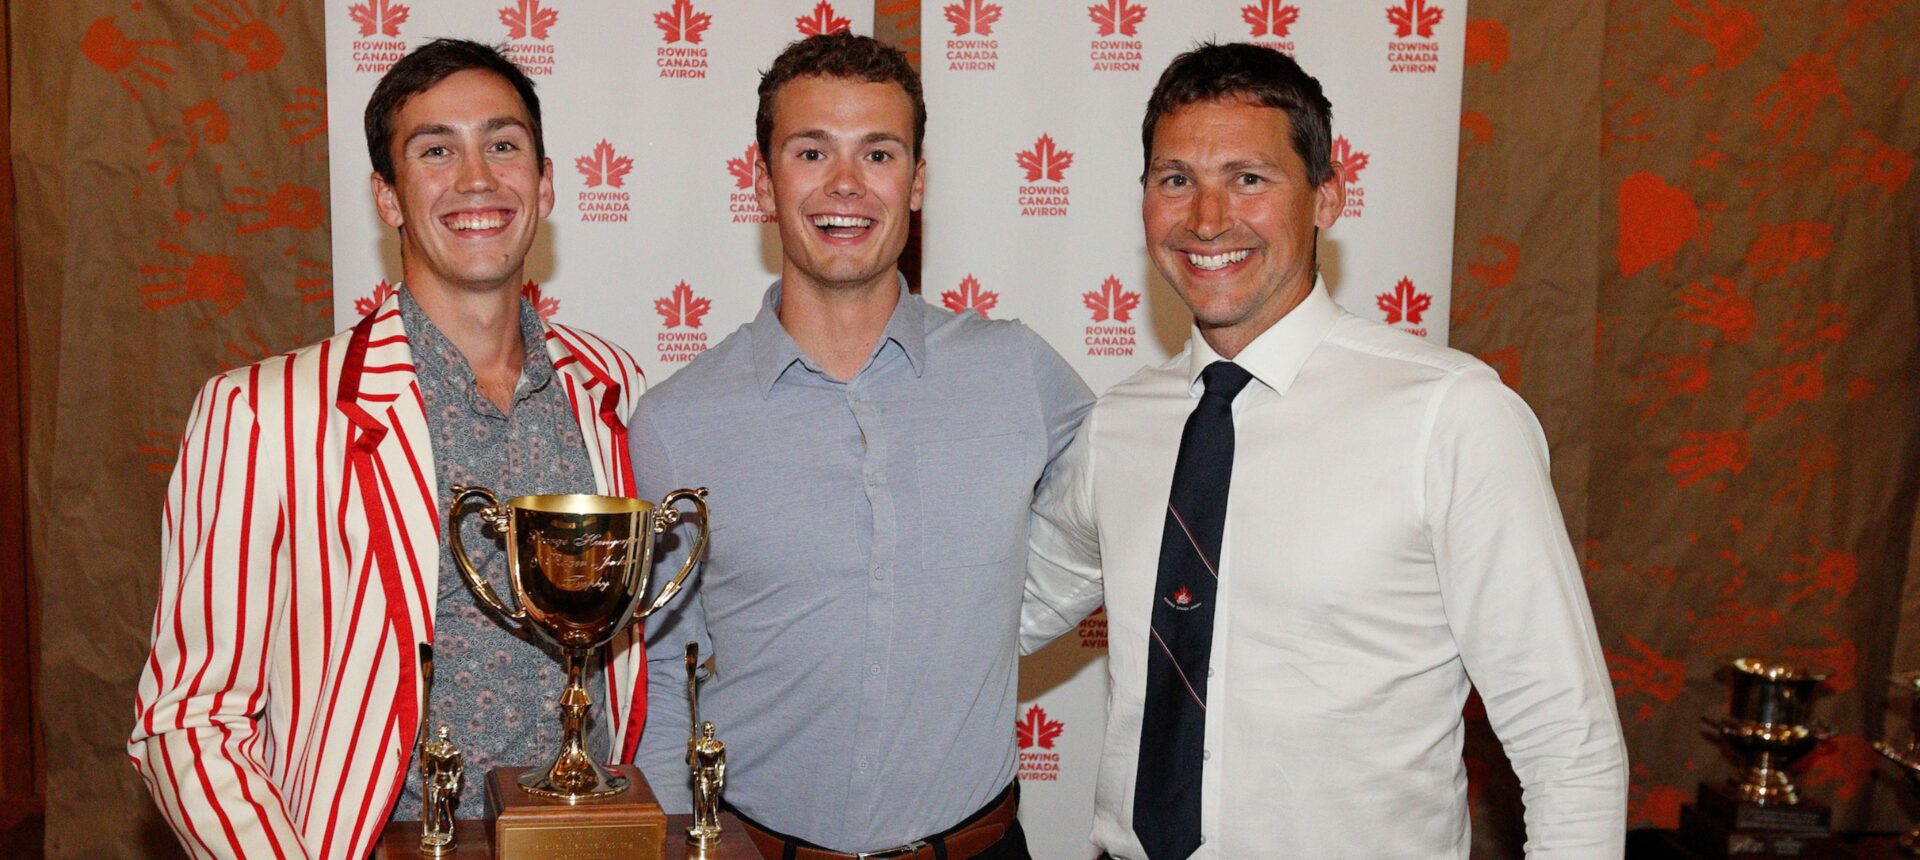 Celebrating Rowing Canada Aviron Alumni at the National Rowing Championships